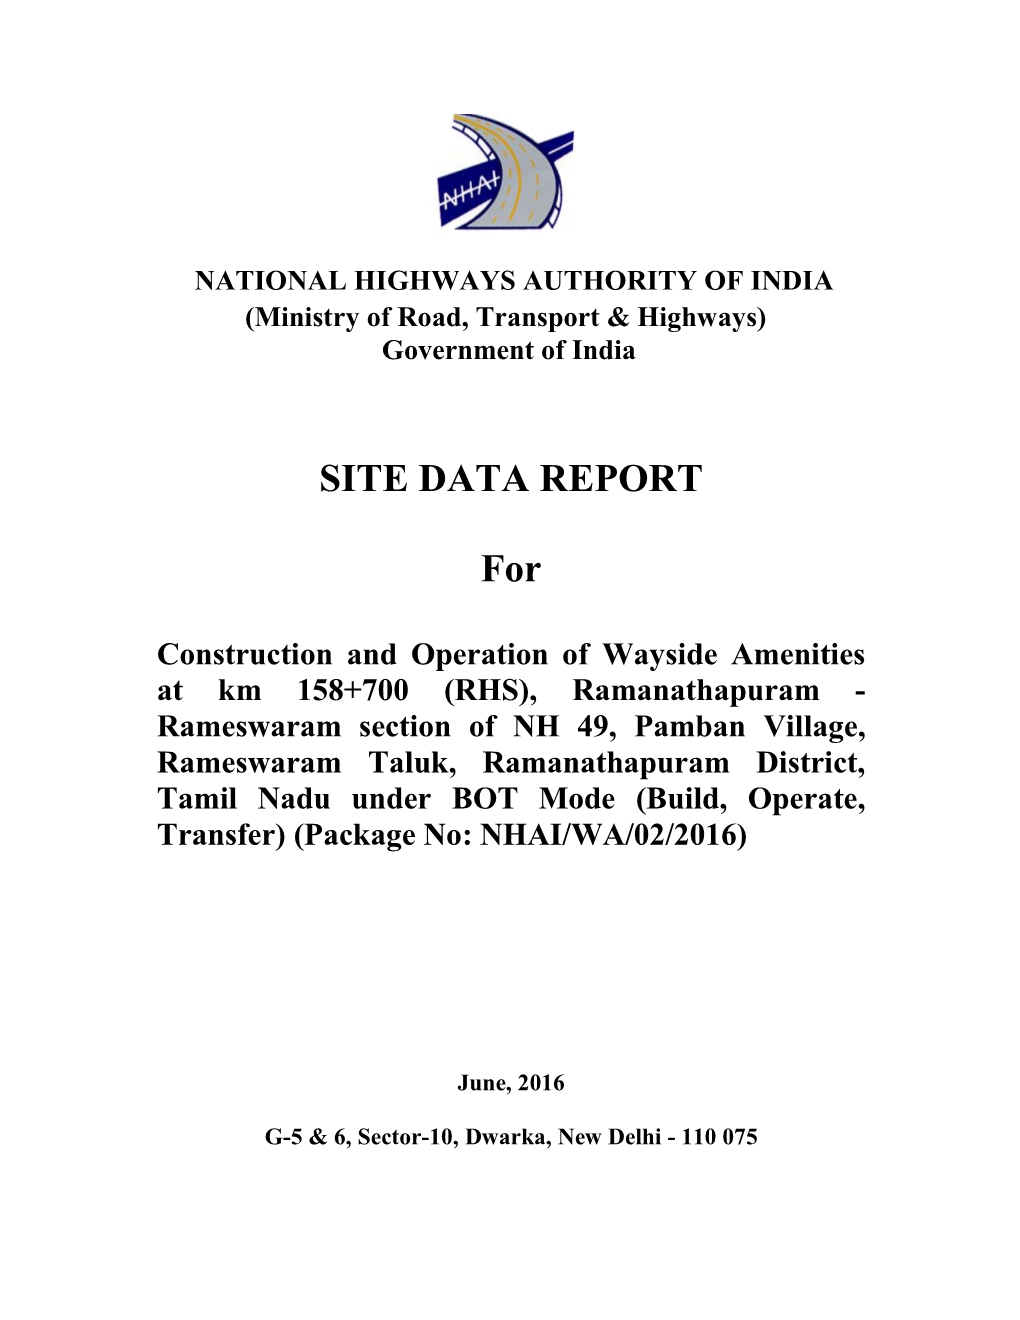 Site Data Report